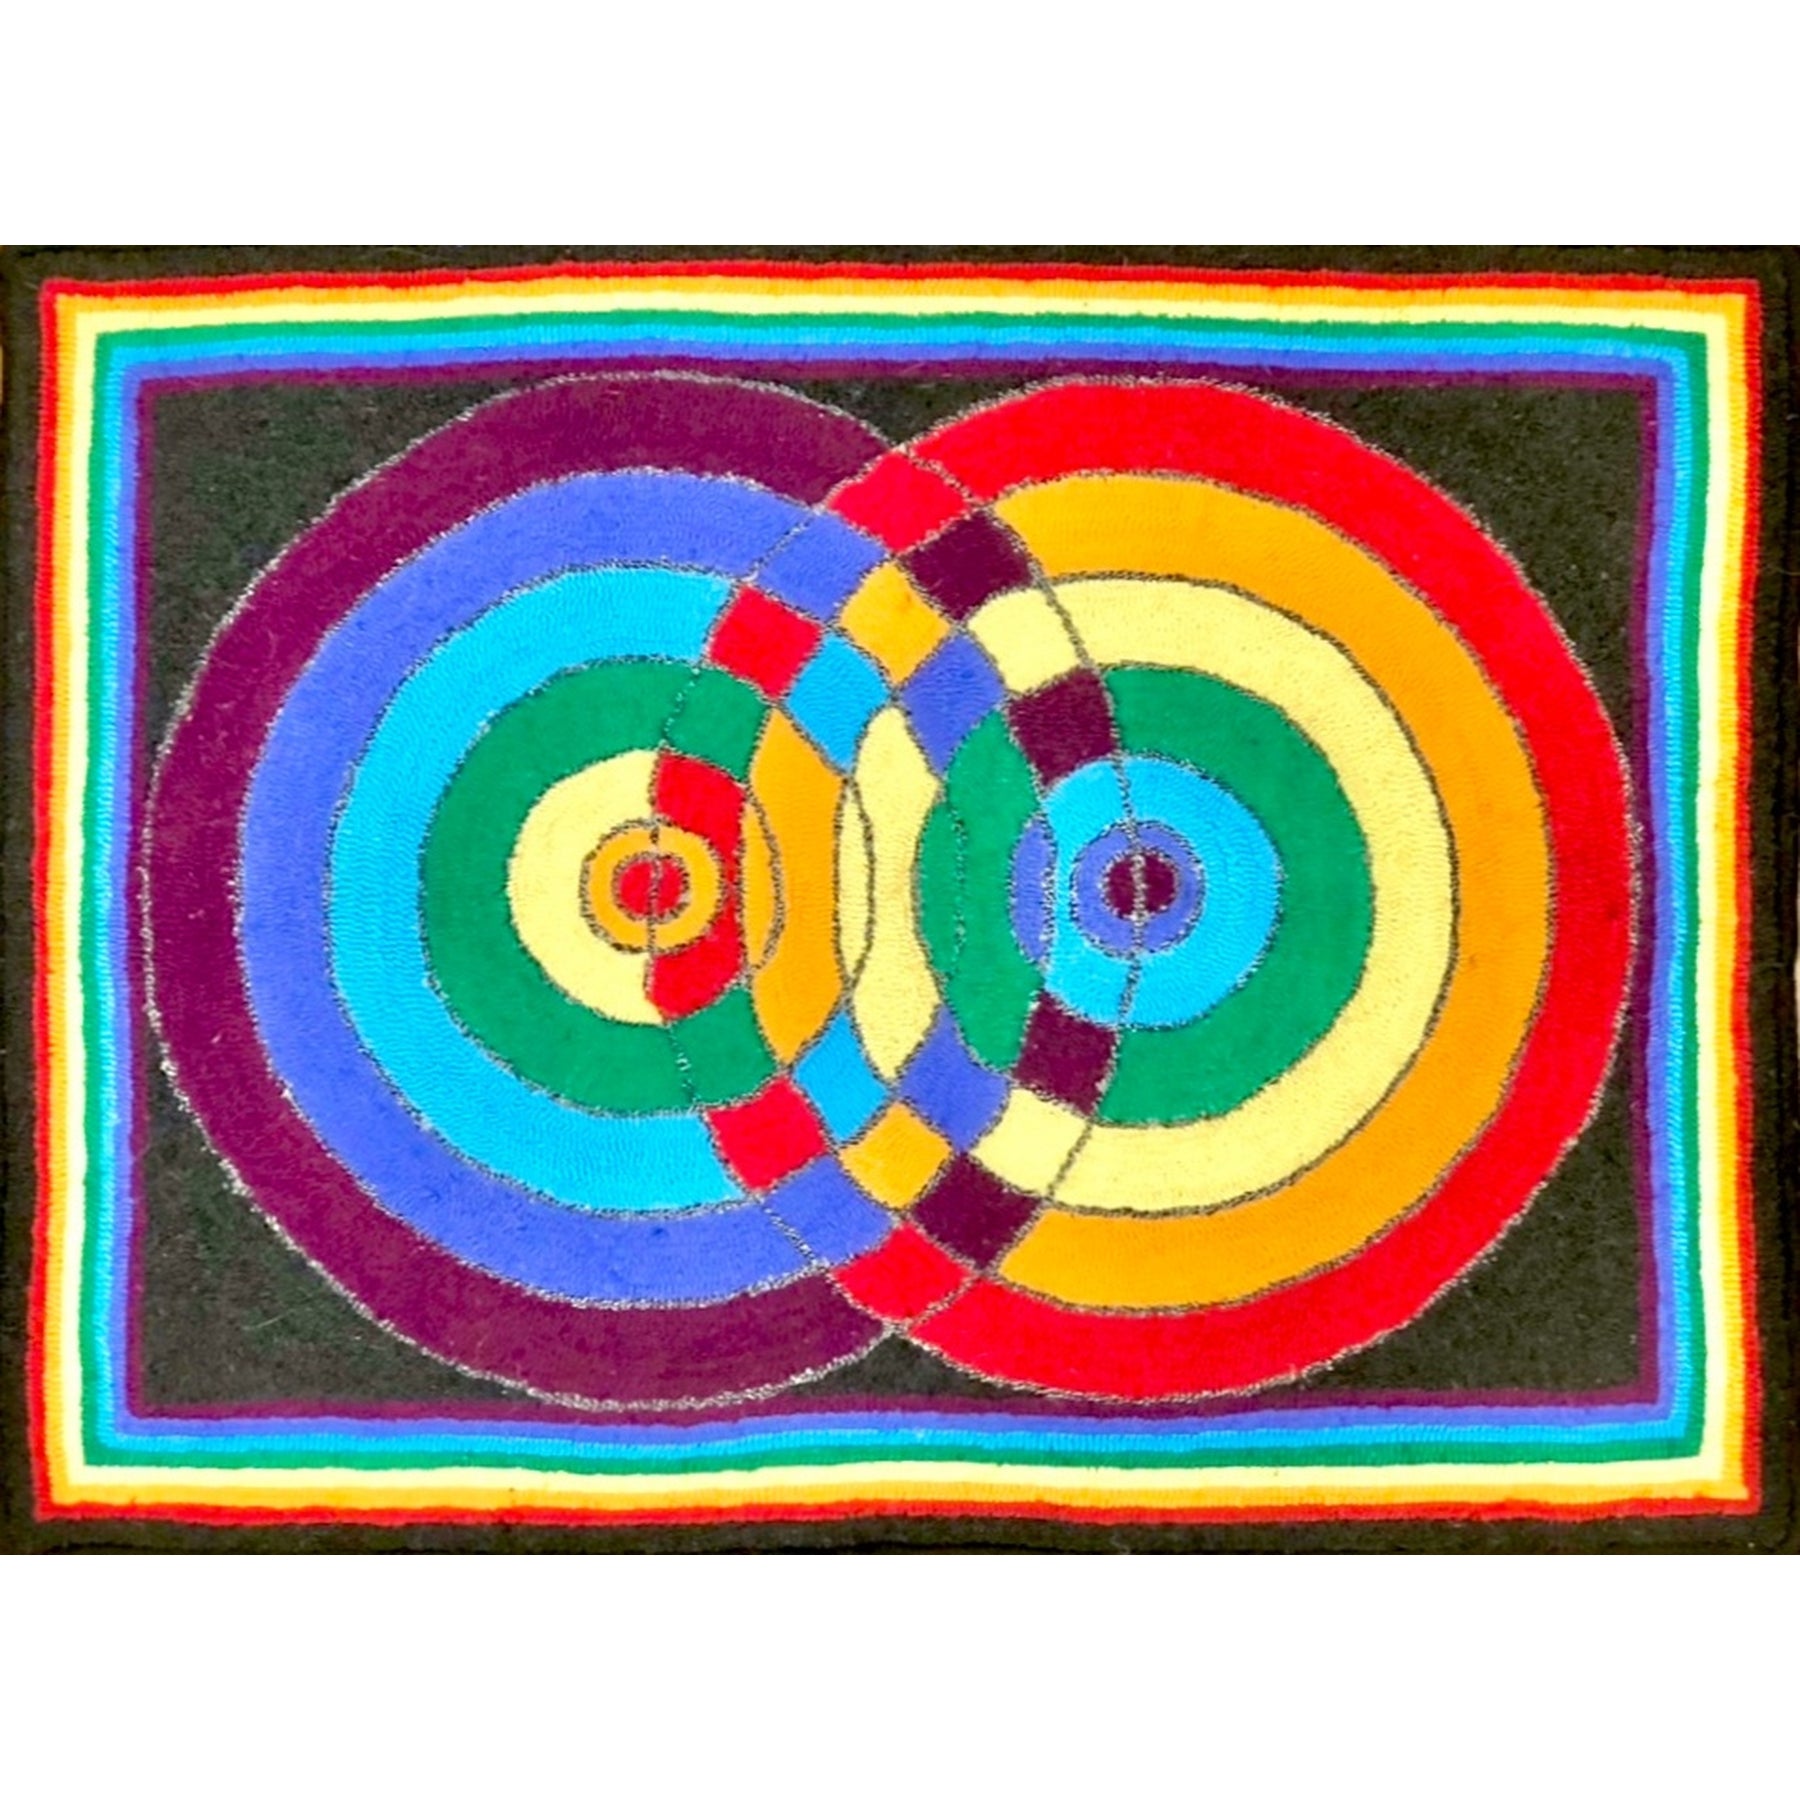 Colliding Circular Rainbows, rug hooked by John Leonard